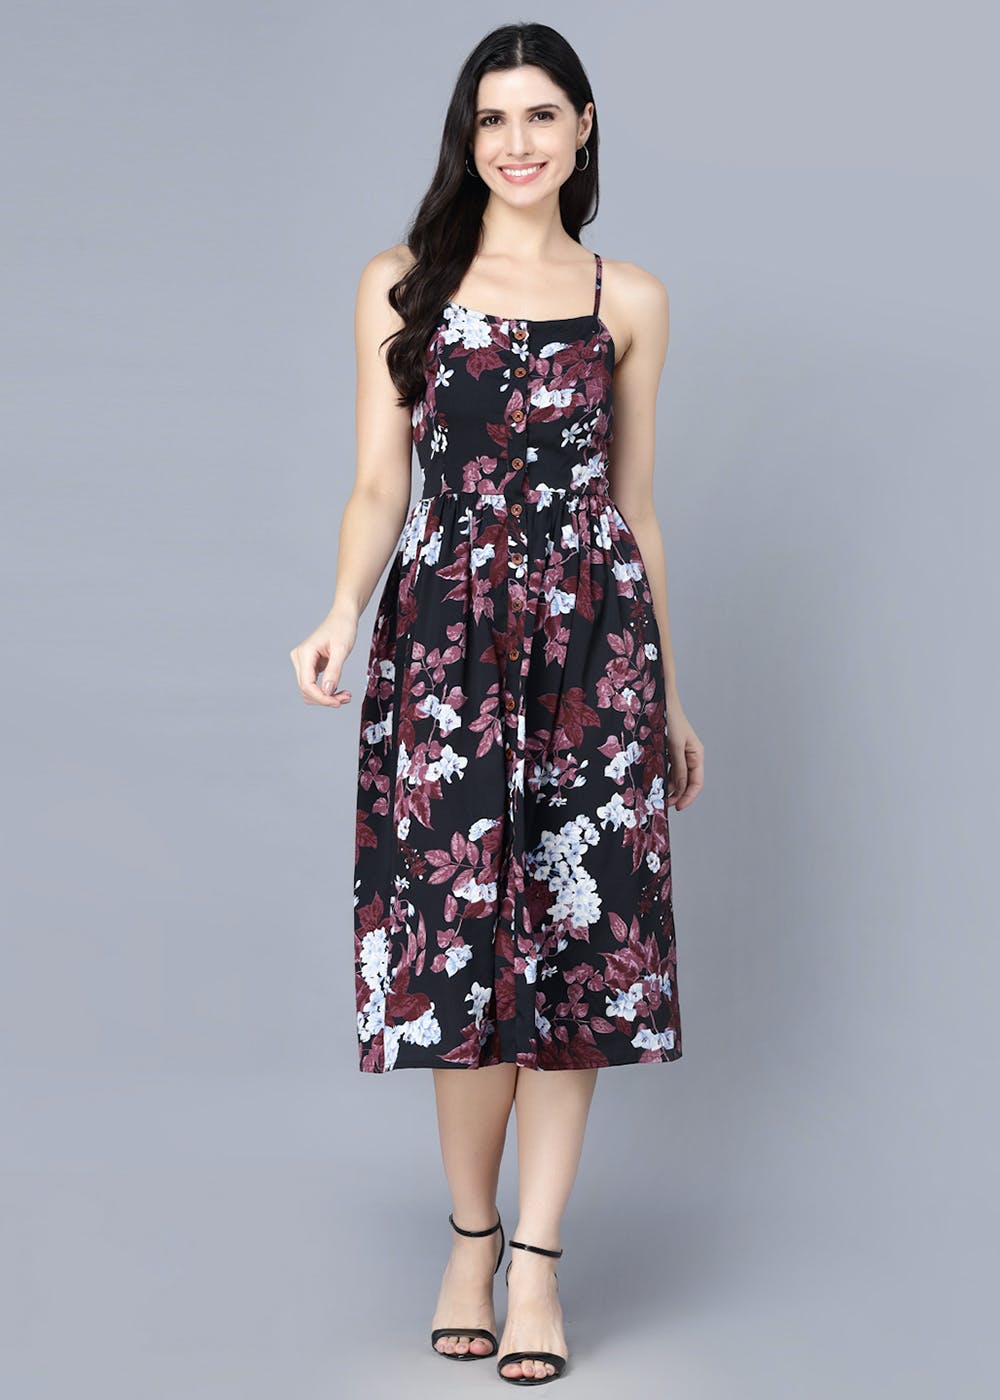 Get Floral Organic Cotton Crepe Midi Dress at ₹ 900 | LBB Shop